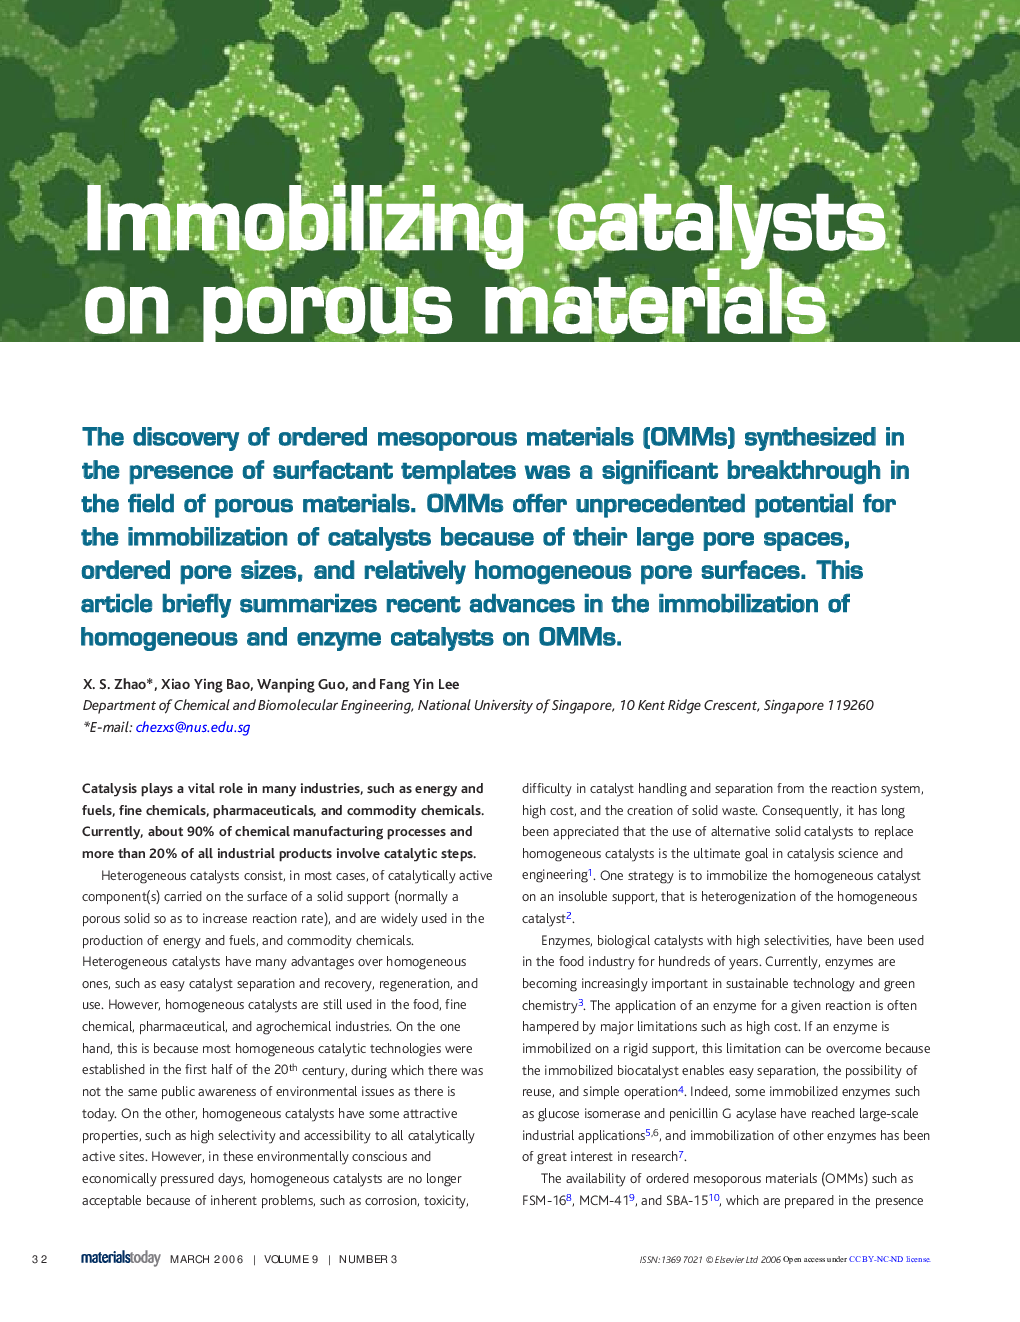 Immobilizing catalysts on porous materials